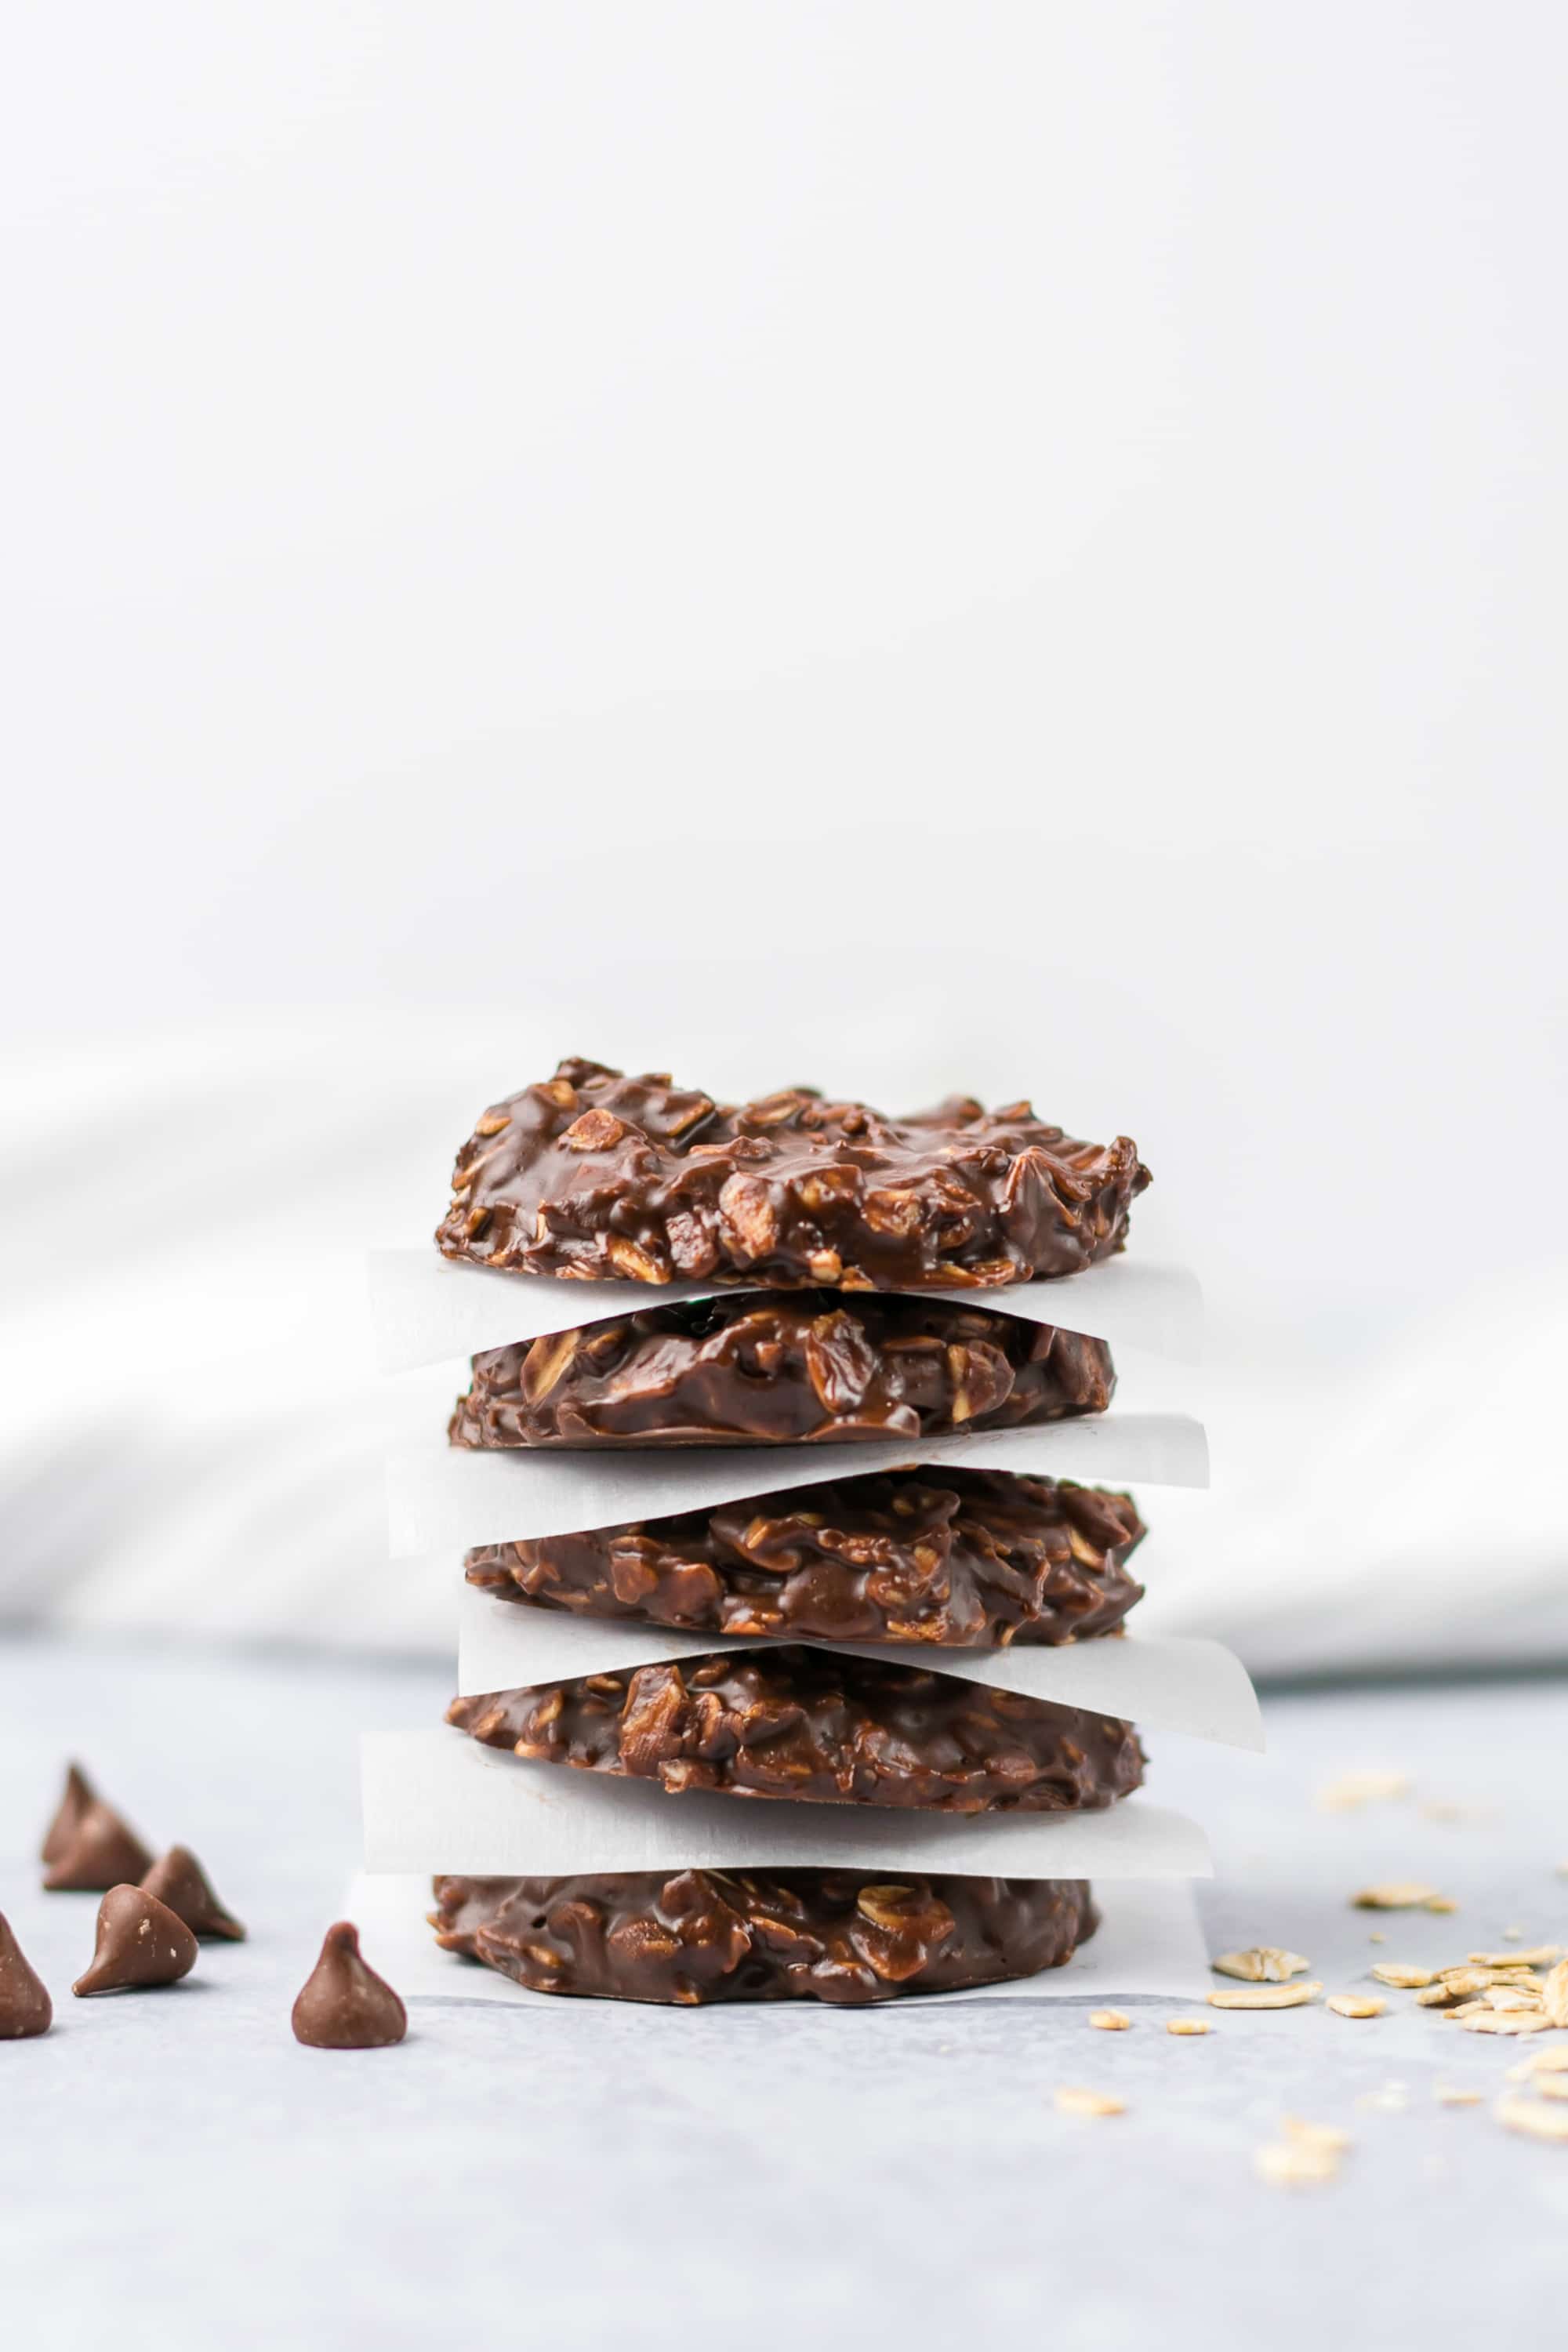 NoBake Chocolate Cookies Recipe